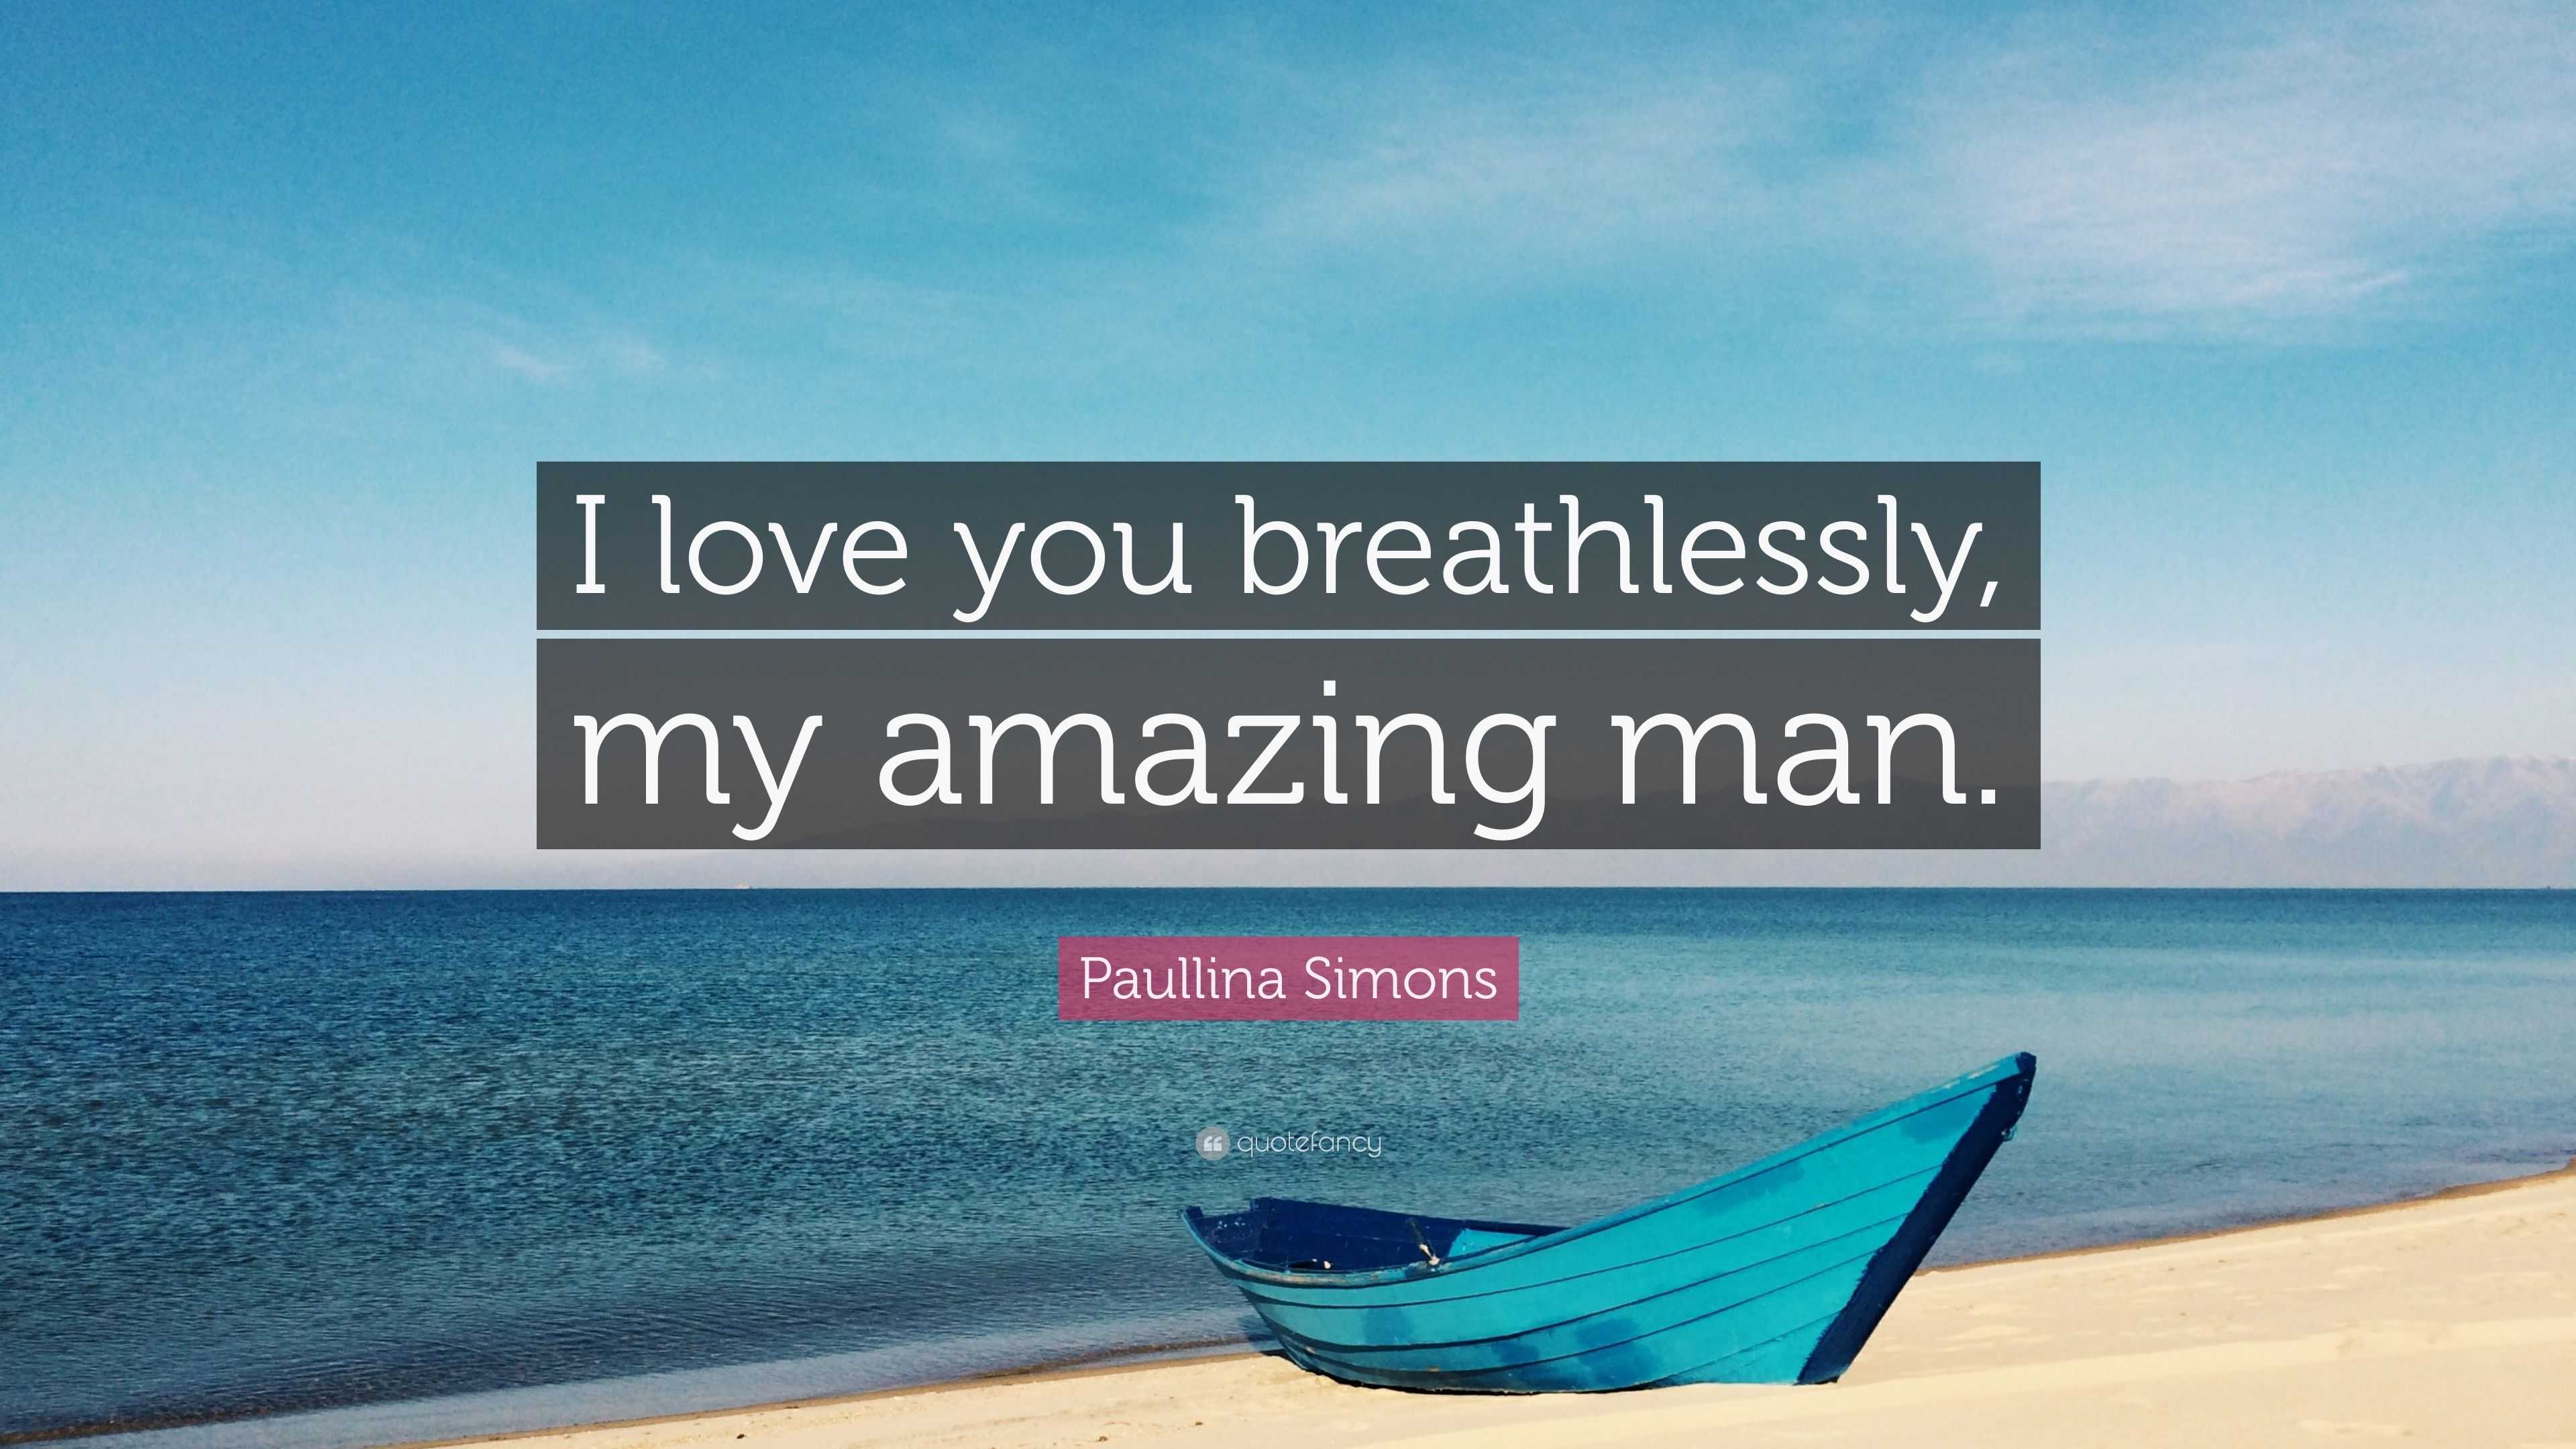 Paullina Simons Quote “I love you breathlessly my amazing man ”